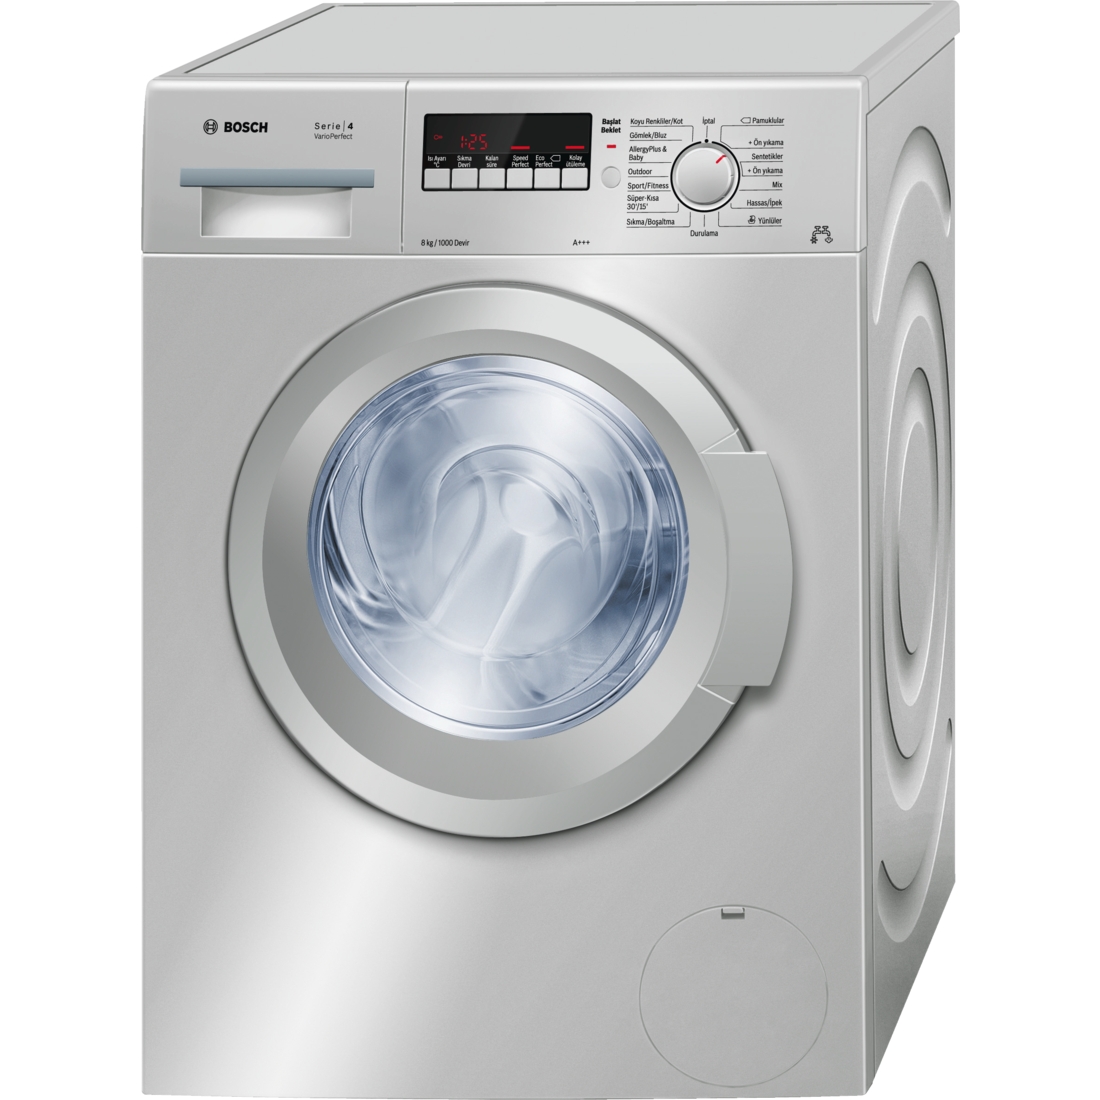 Bosch çamaşır makinesi programları